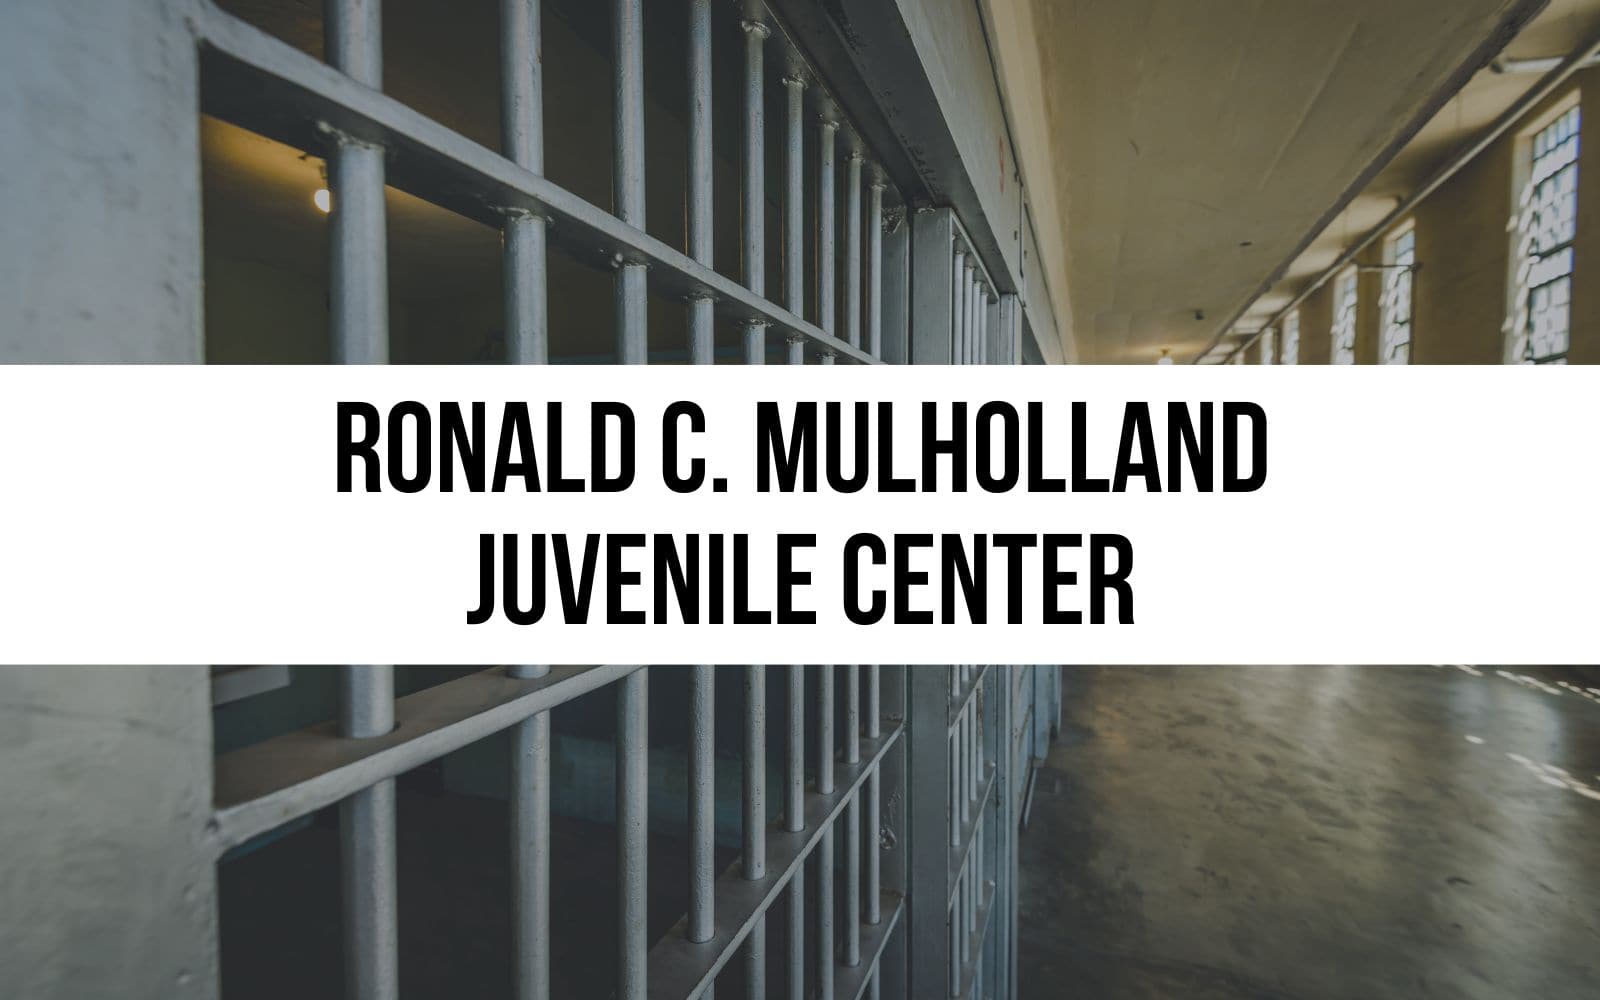 Ronald C. Mulholland Juvenile Center